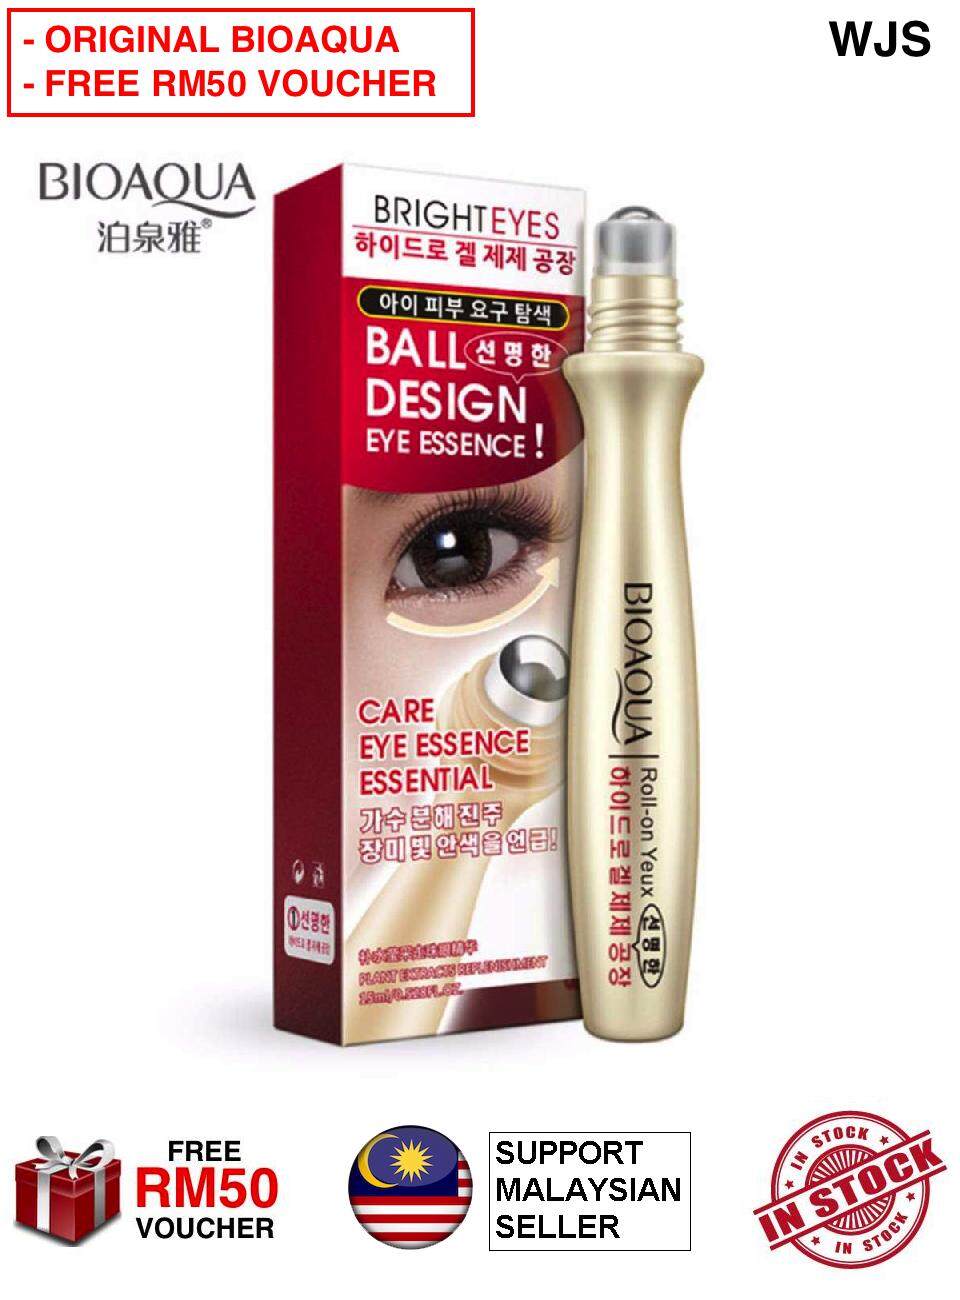 (2 IN A SET) WJS BioAqua Eyes Essence Care Eye Essence Essential Ball Design Bioaqua Balls Design 15ml x 2 [FREE RM 50 VOUCHER]